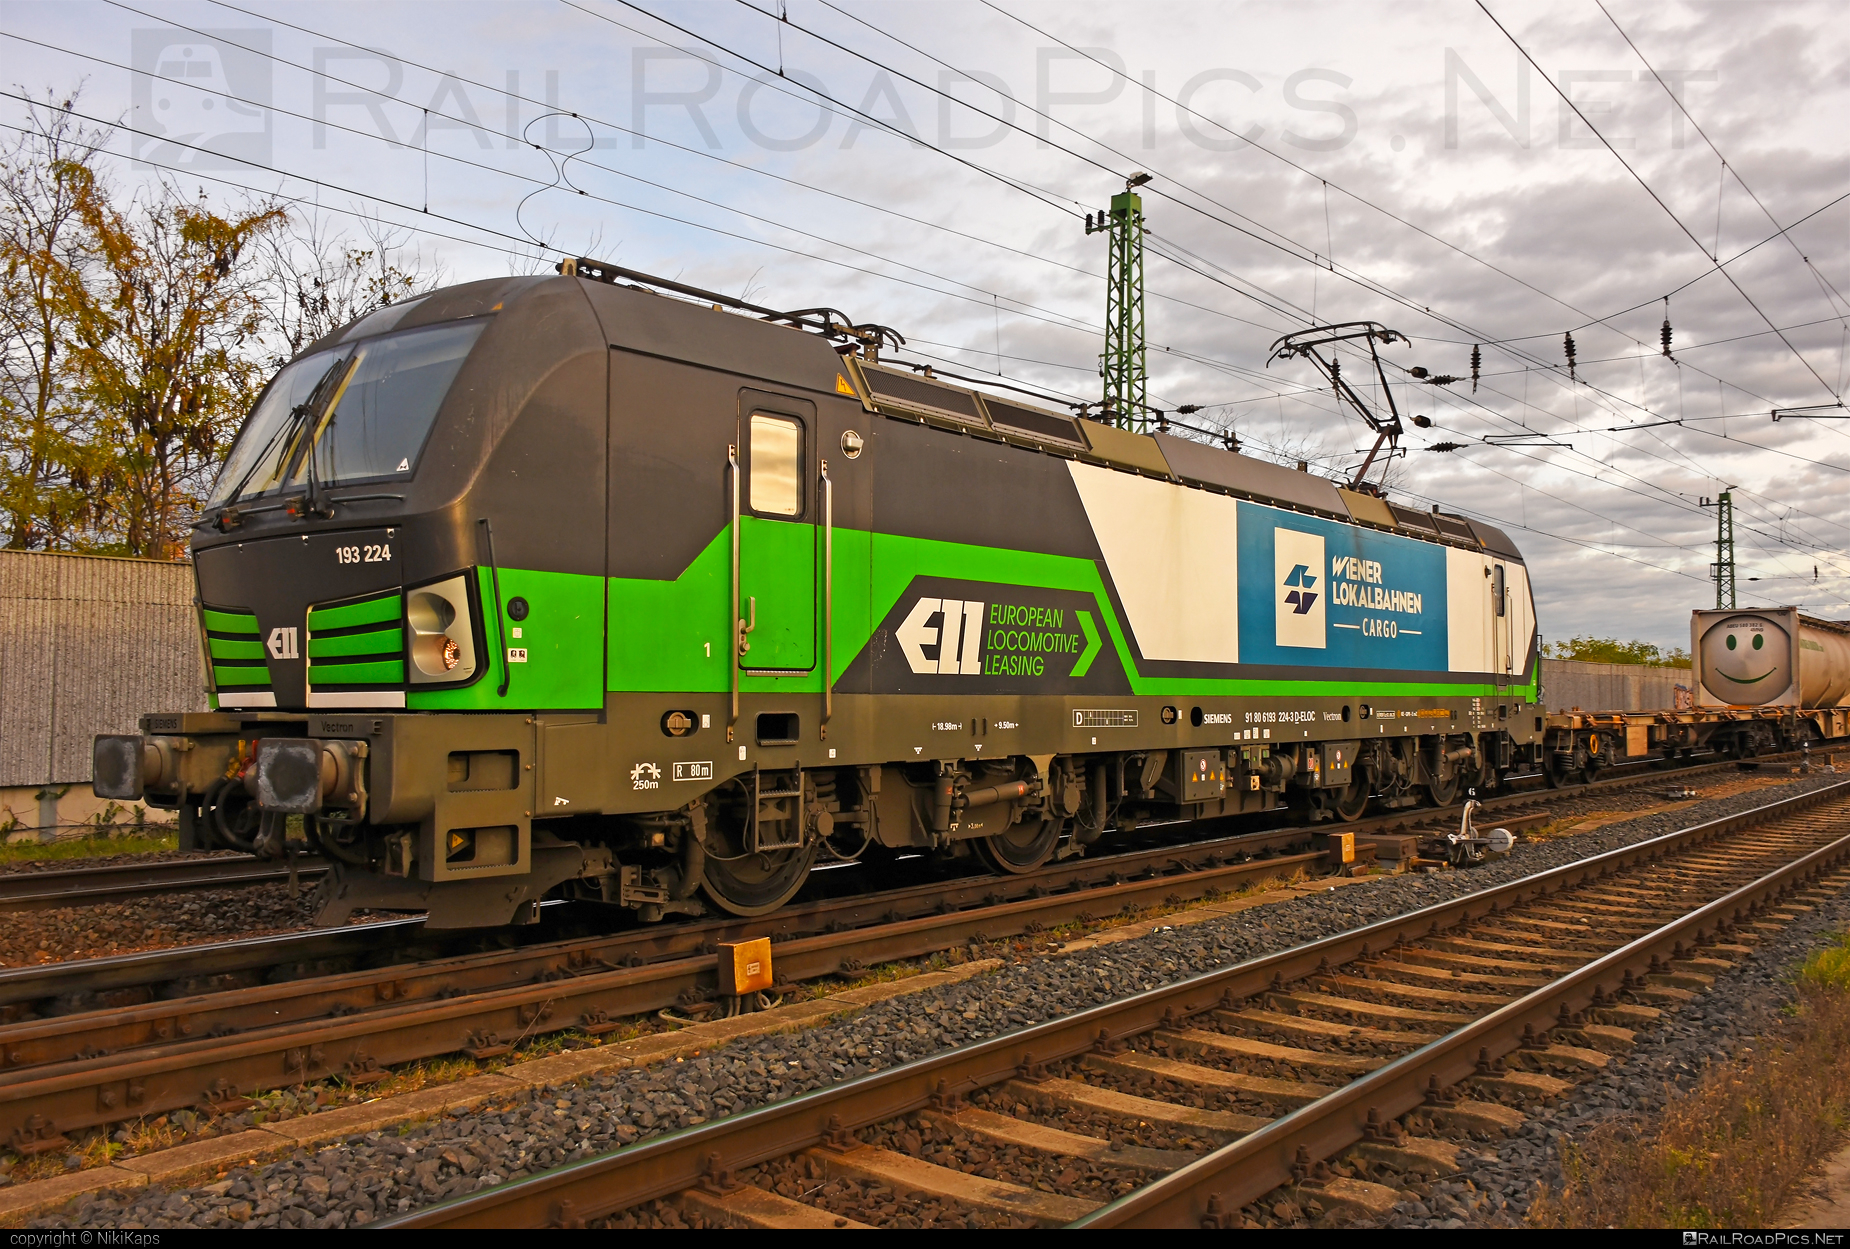 Siemens Vectron AC - 193 224 operated by Wiener Lokalbahnen Cargo GmbH #ell #ellgermany #eloc #europeanlocomotiveleasing #flatwagon #siemens #siemensVectron #siemensVectronAC #vectron #vectronAC #wienerlokalbahnencargo #wienerlokalbahnencargogmbh #wlc